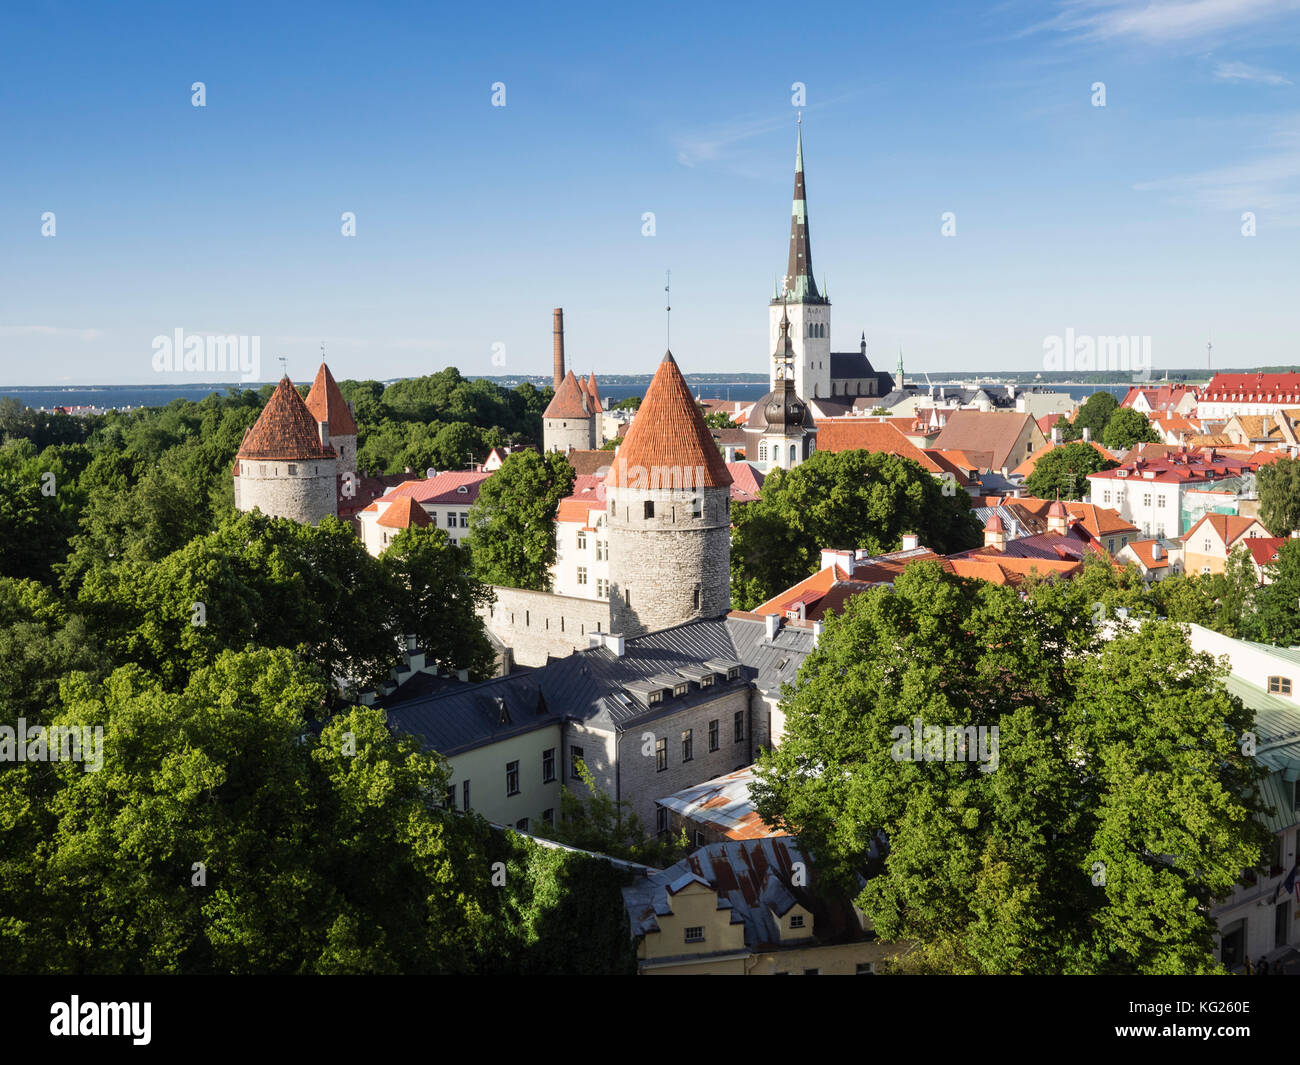 Cityscape view from the Patkuli viewing platform, Old Town, UNESCO World Heritage Site, Tallinn, Estonia, Baltic States, Europe Stock Photo